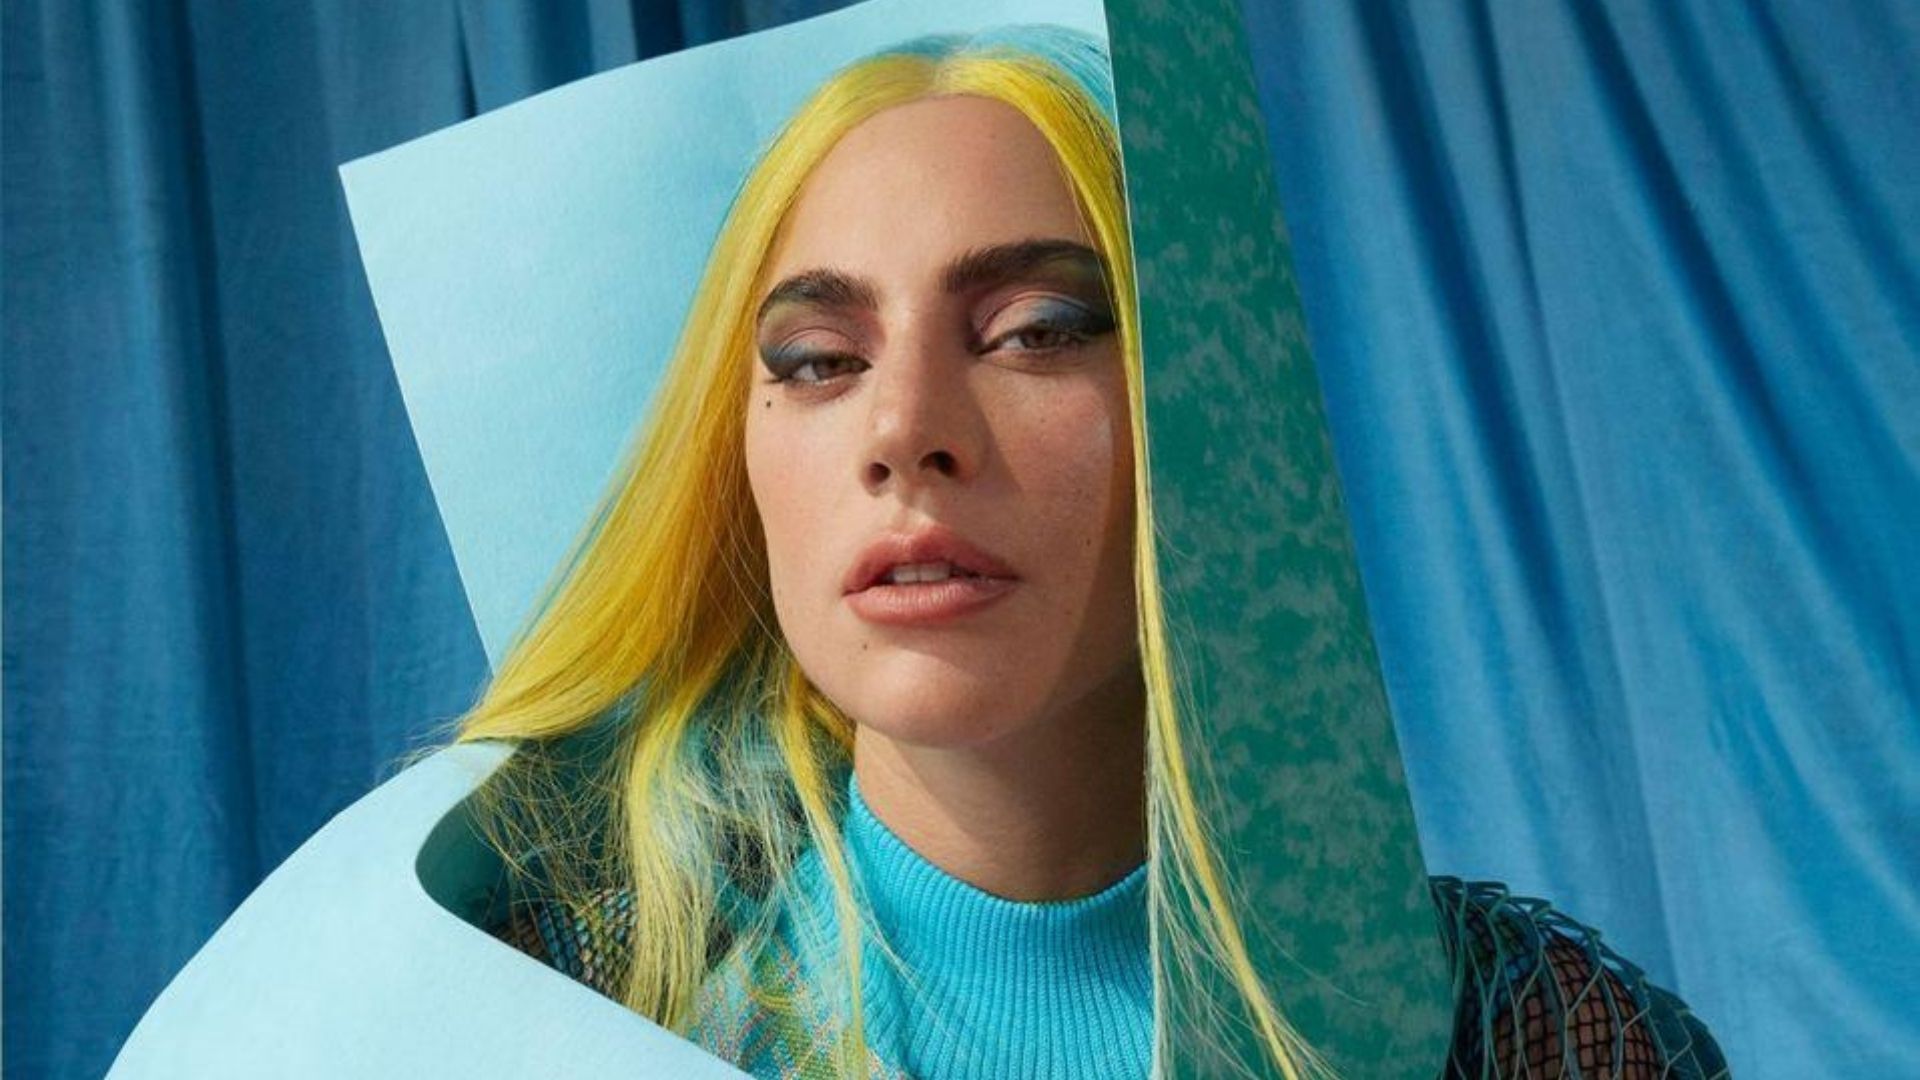 Está vindo aí! Lady Gaga estampa nova capa da Billboard e confirma clipe de “911”